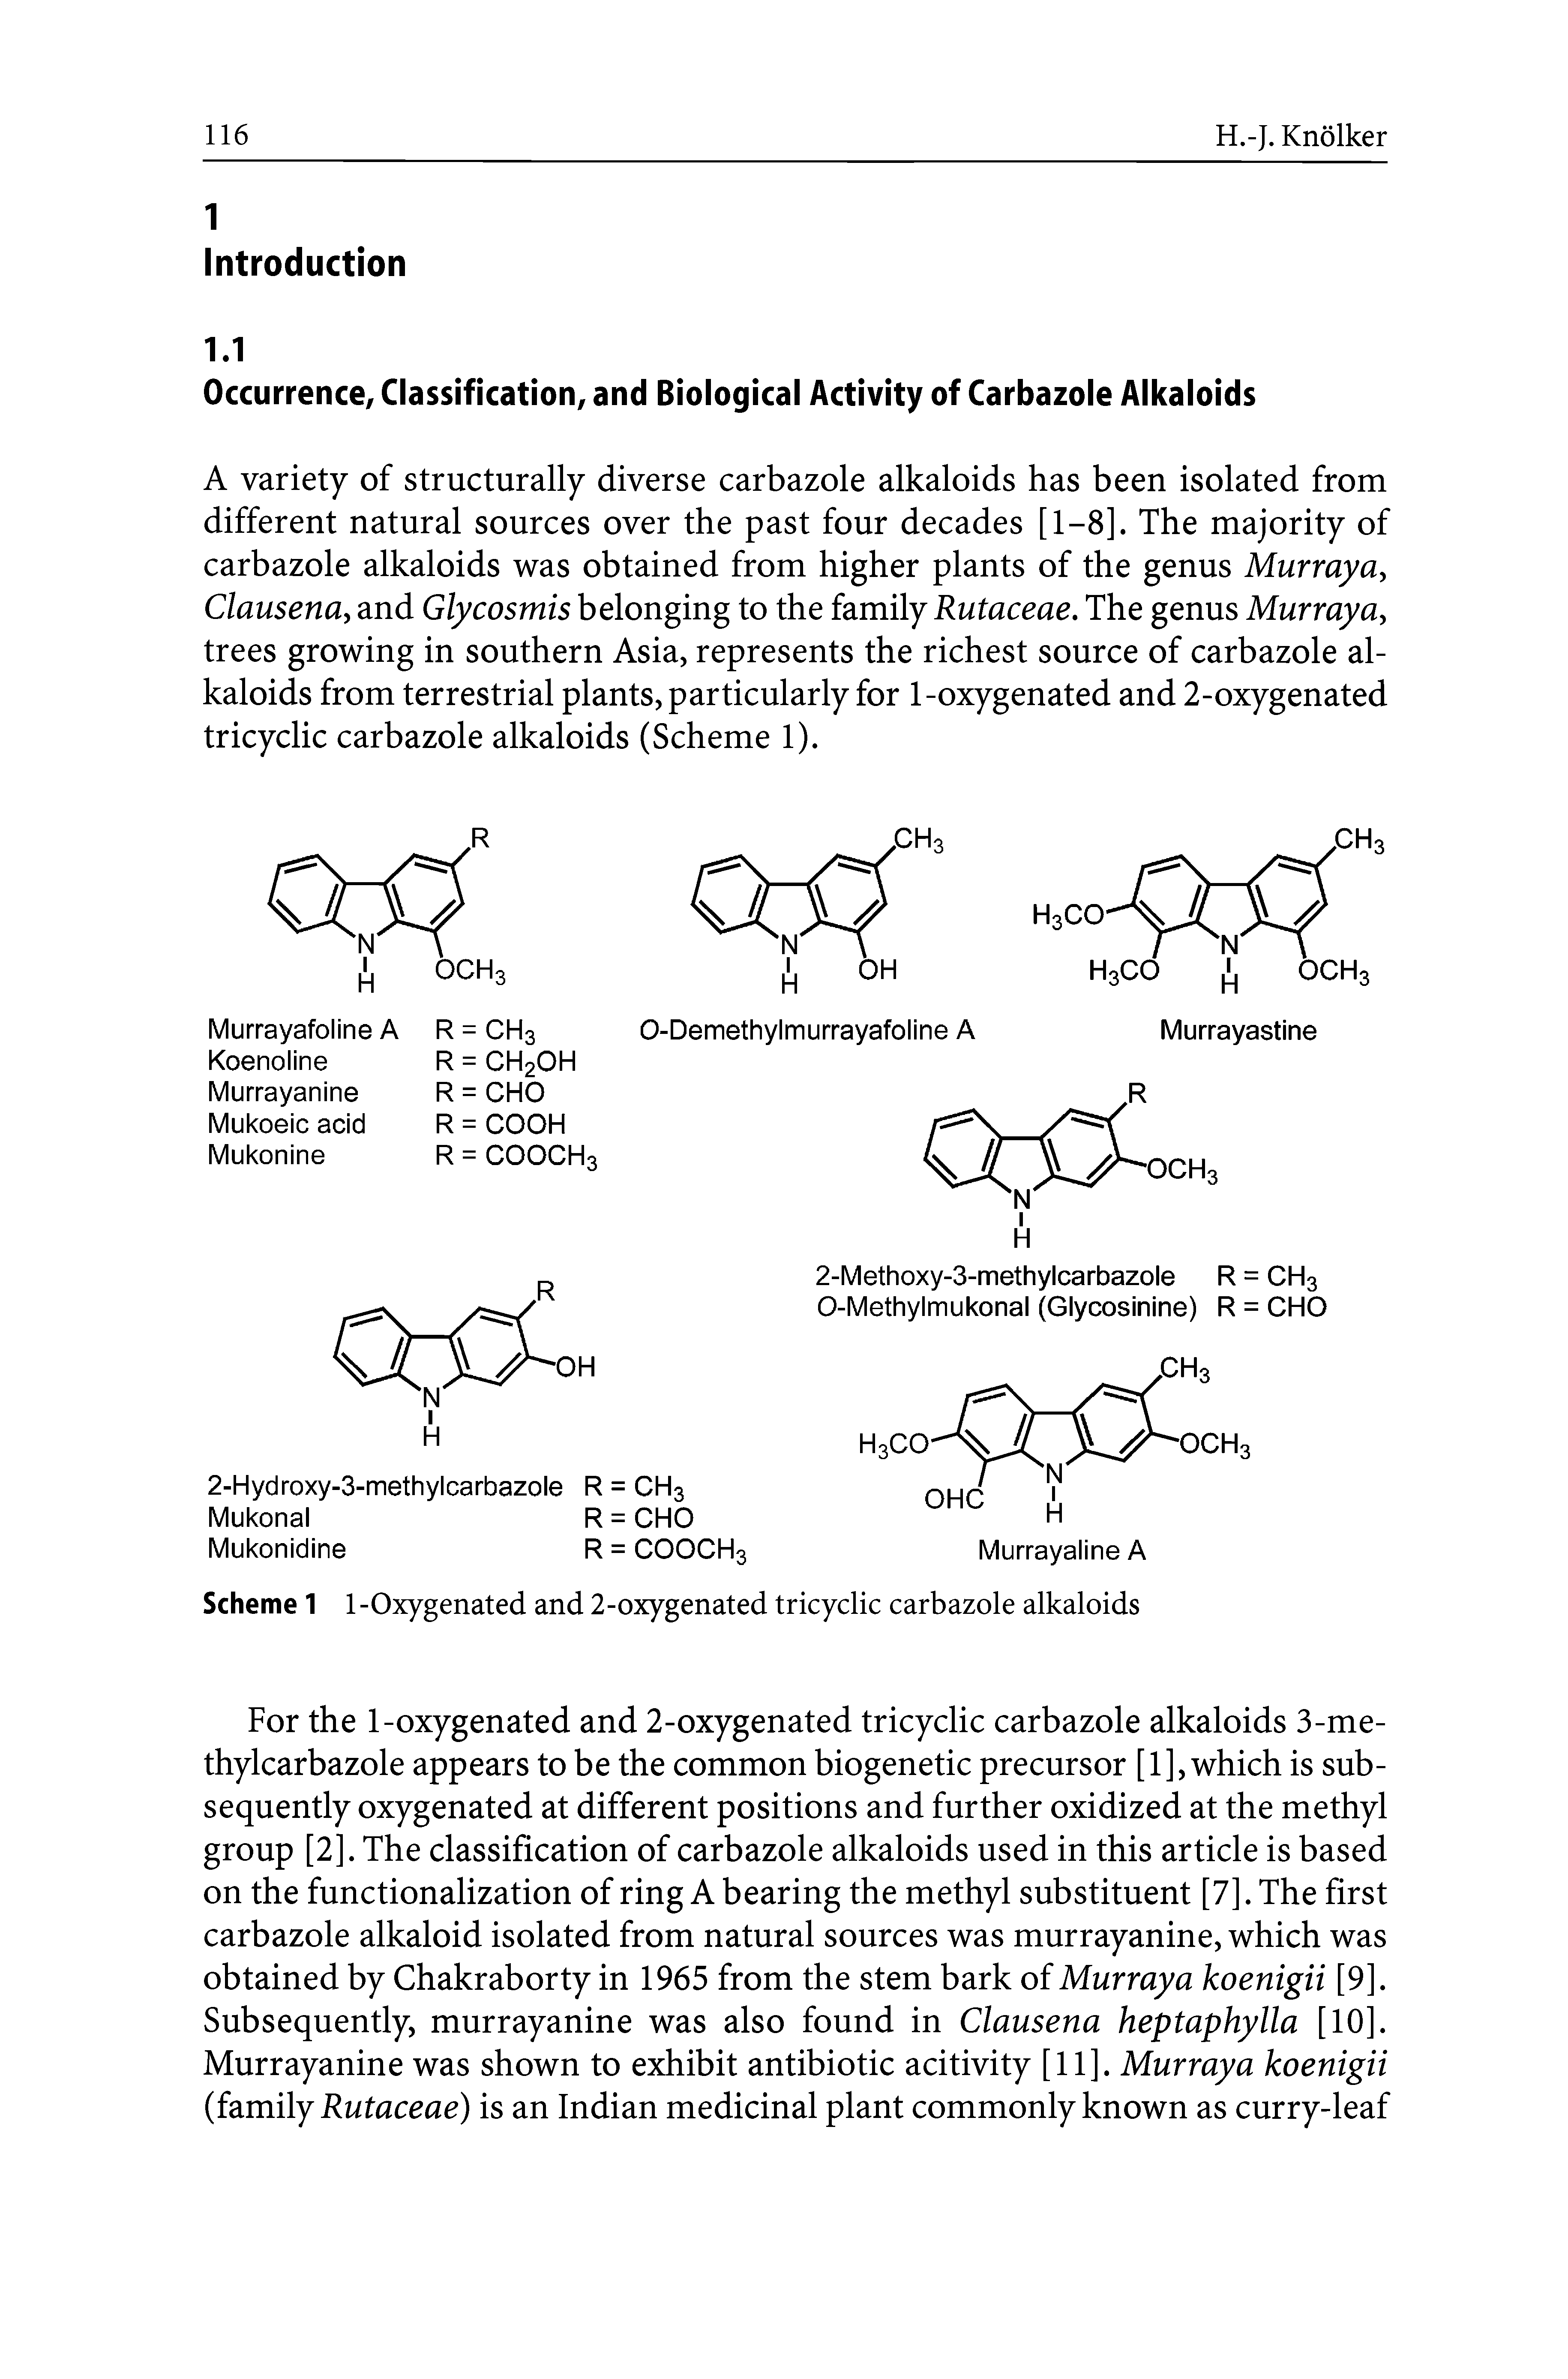 Scheme 1 1-Oxygenated and 2-oxygenated tricyclic carbazole alkaloids...